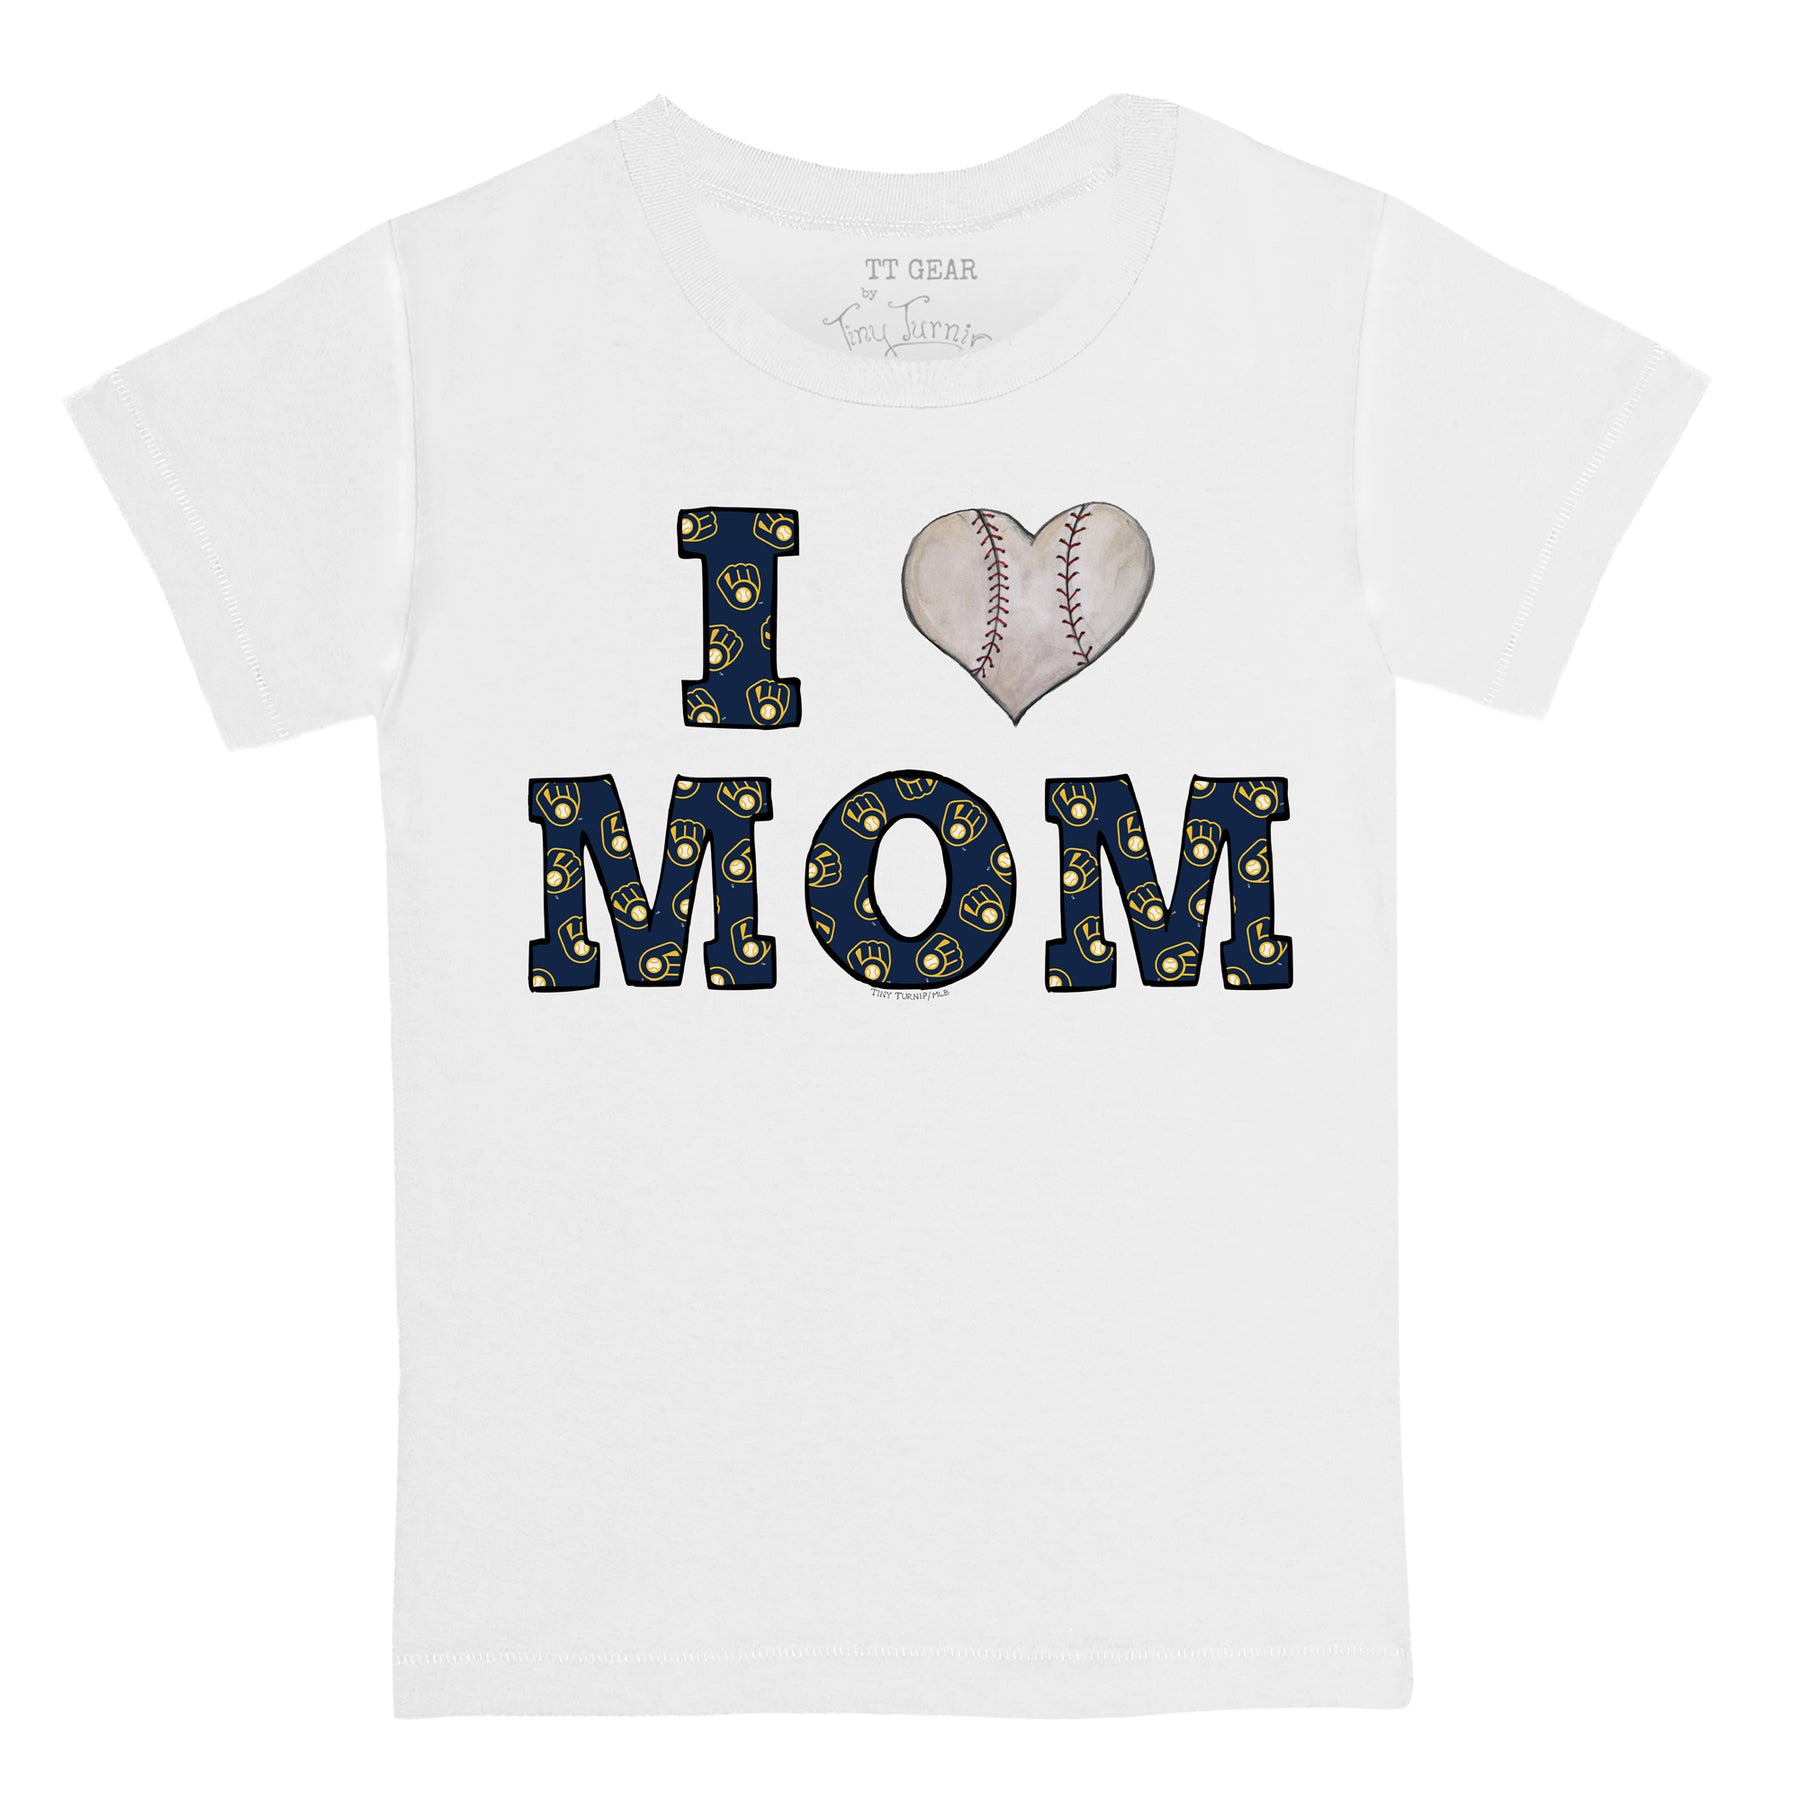 Milwaukee Brewers I Love Mom Tee Shirt